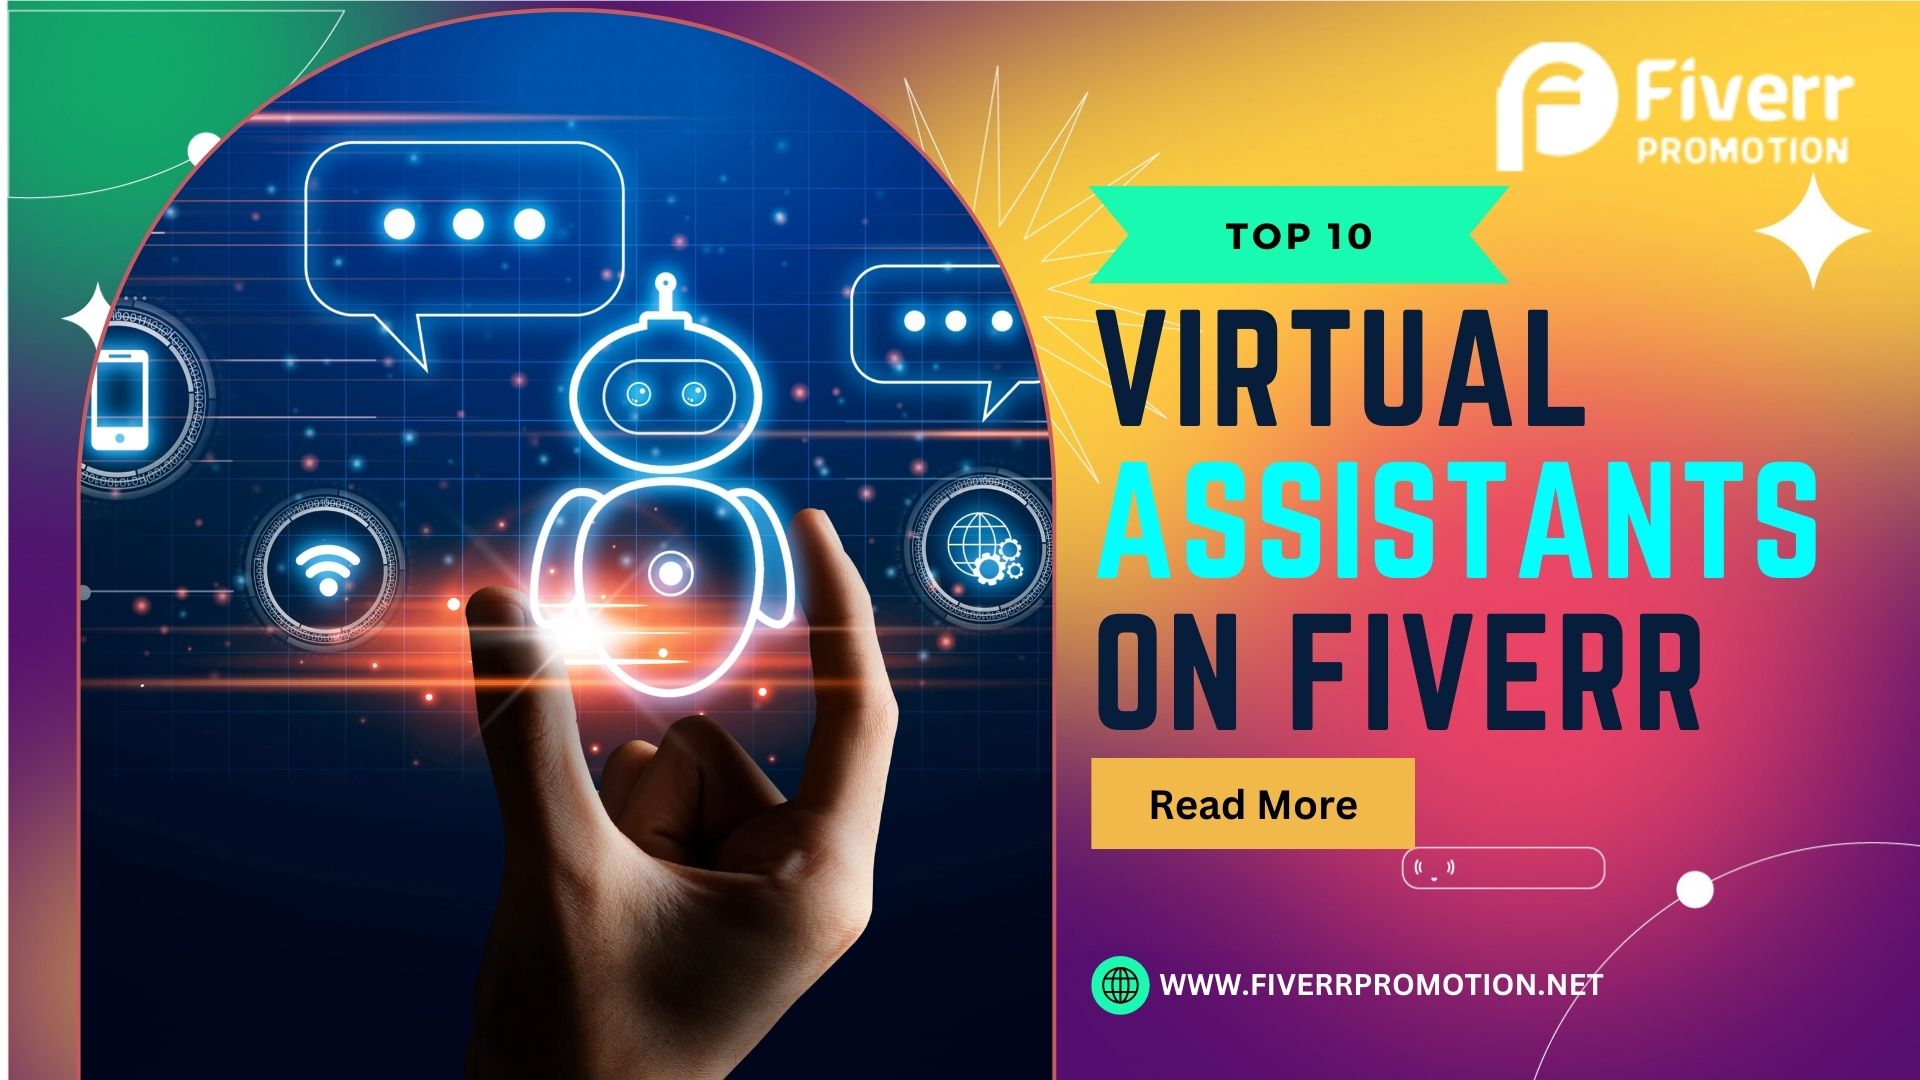 Top 10 Virtual Assistants on Fiverr